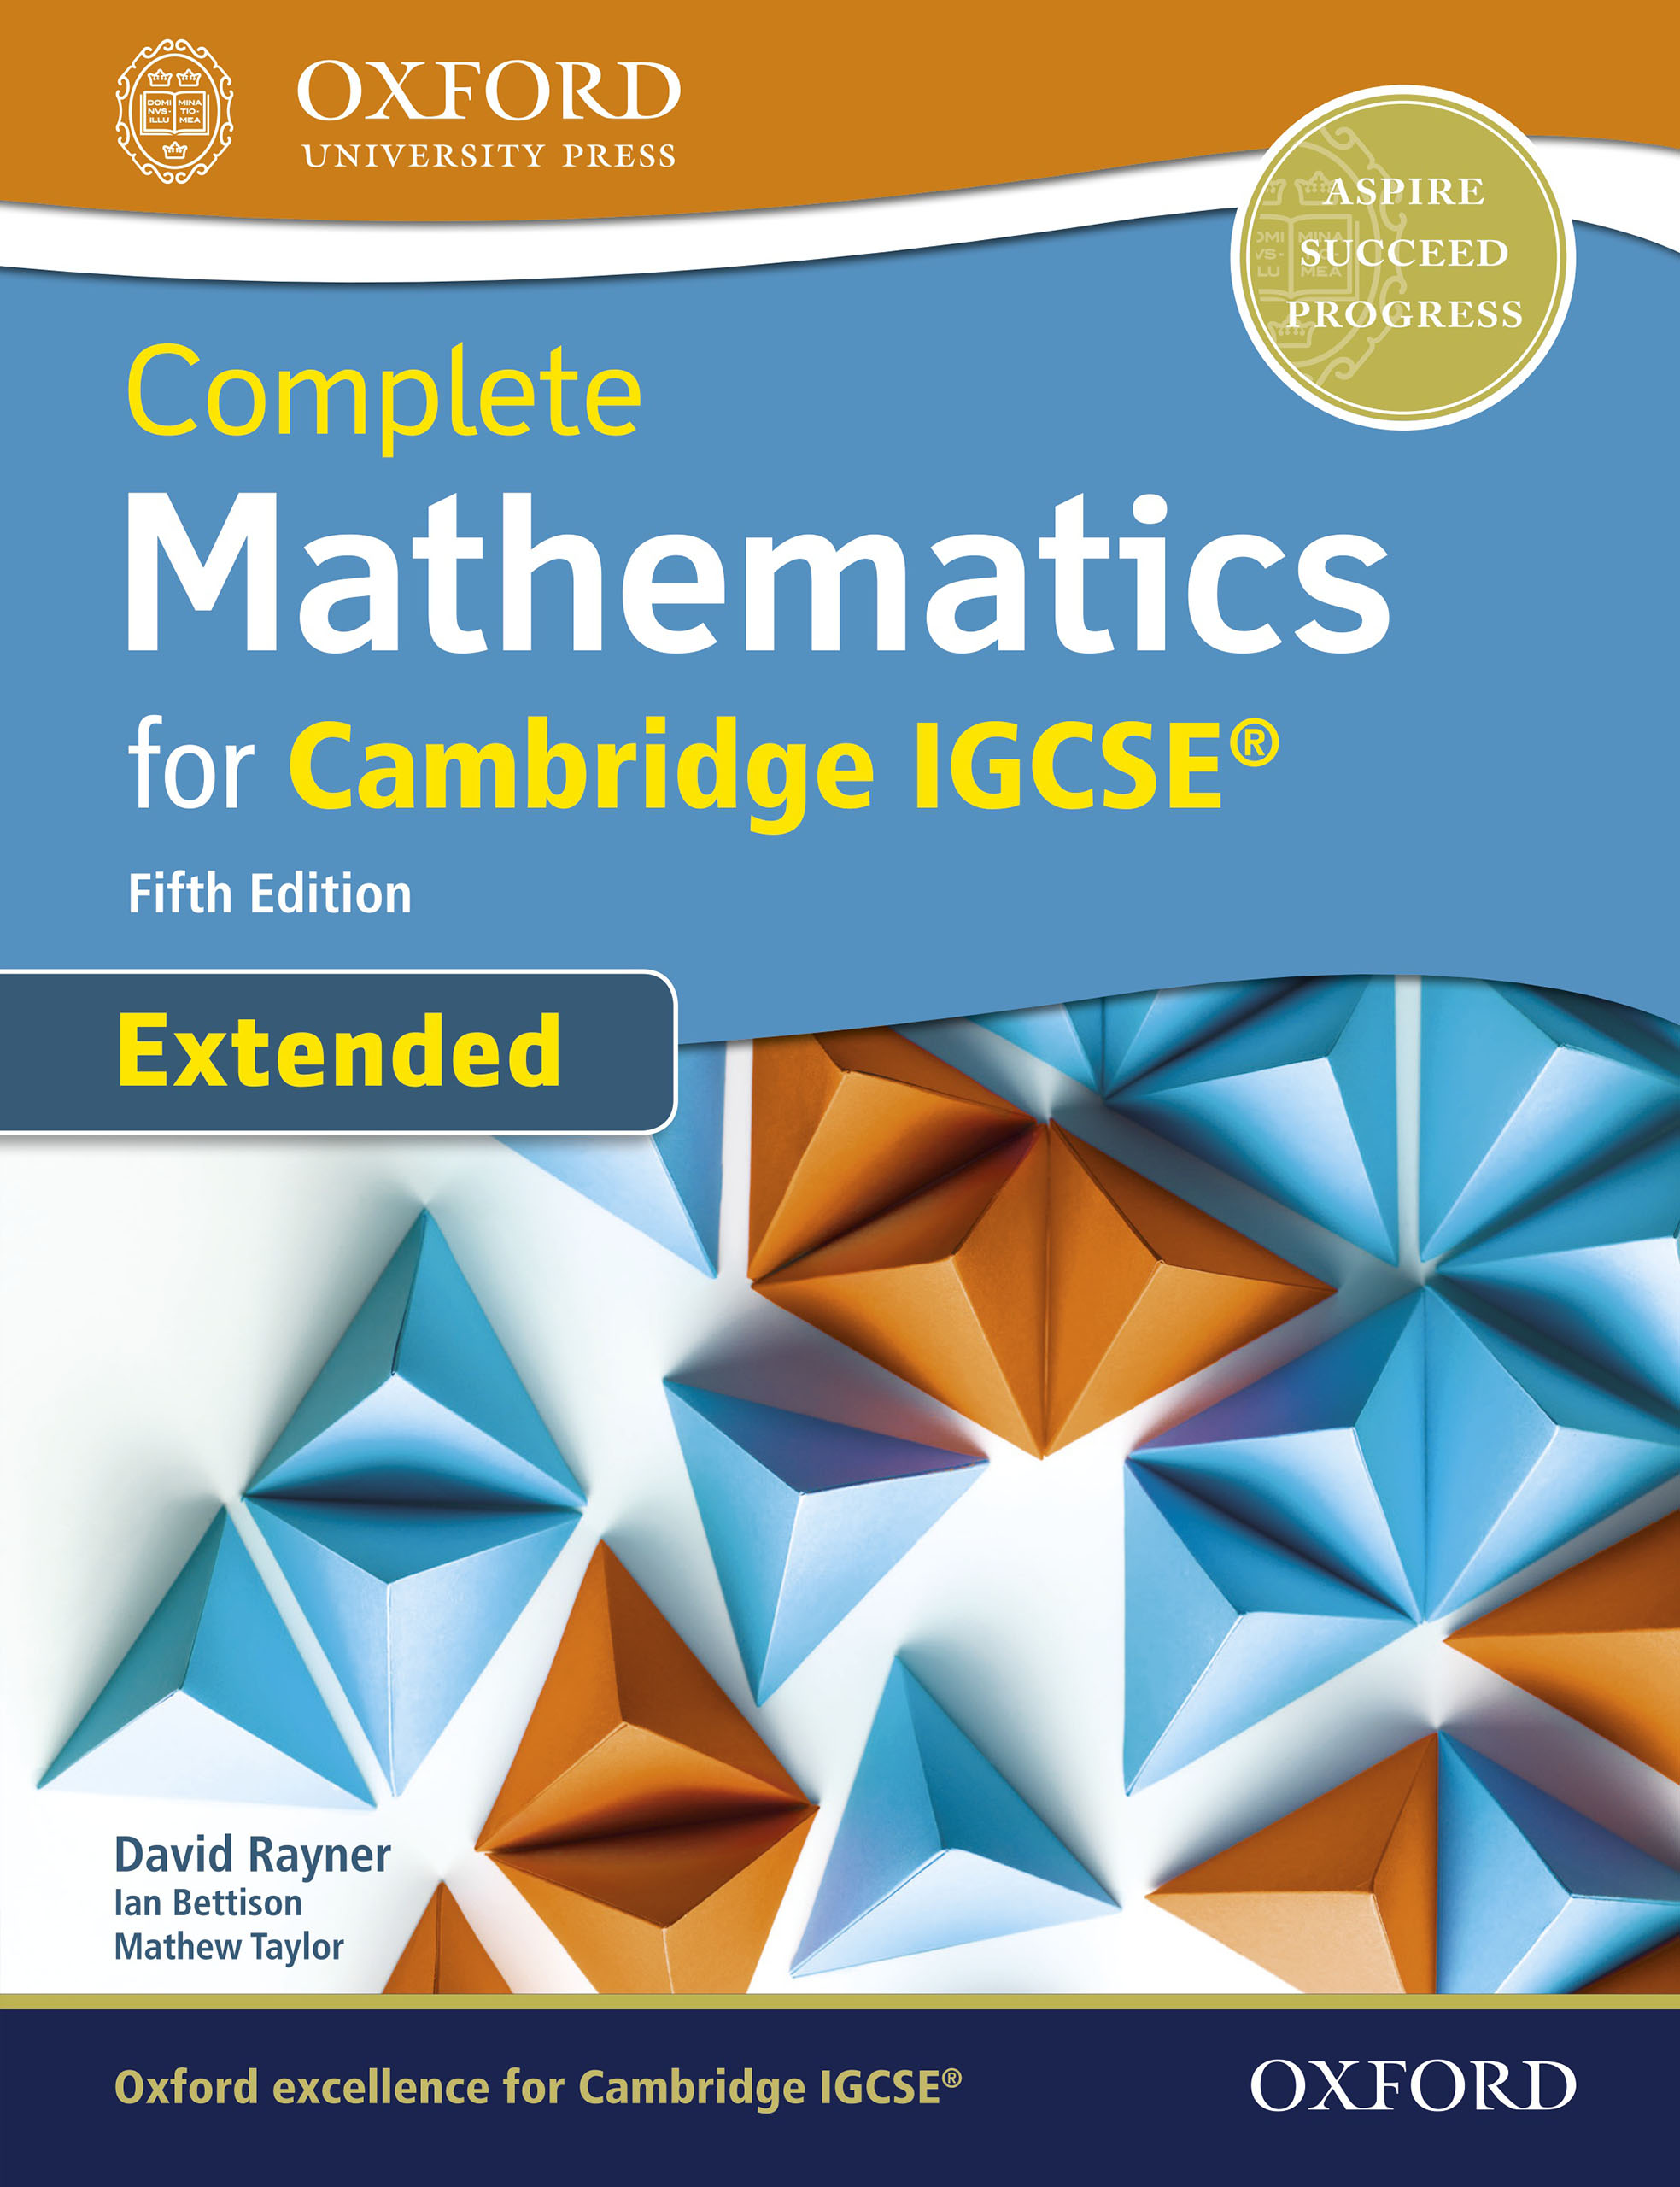 pdf-ebook-oxford-complete-mathematics-for-cambridge-igcse-extended